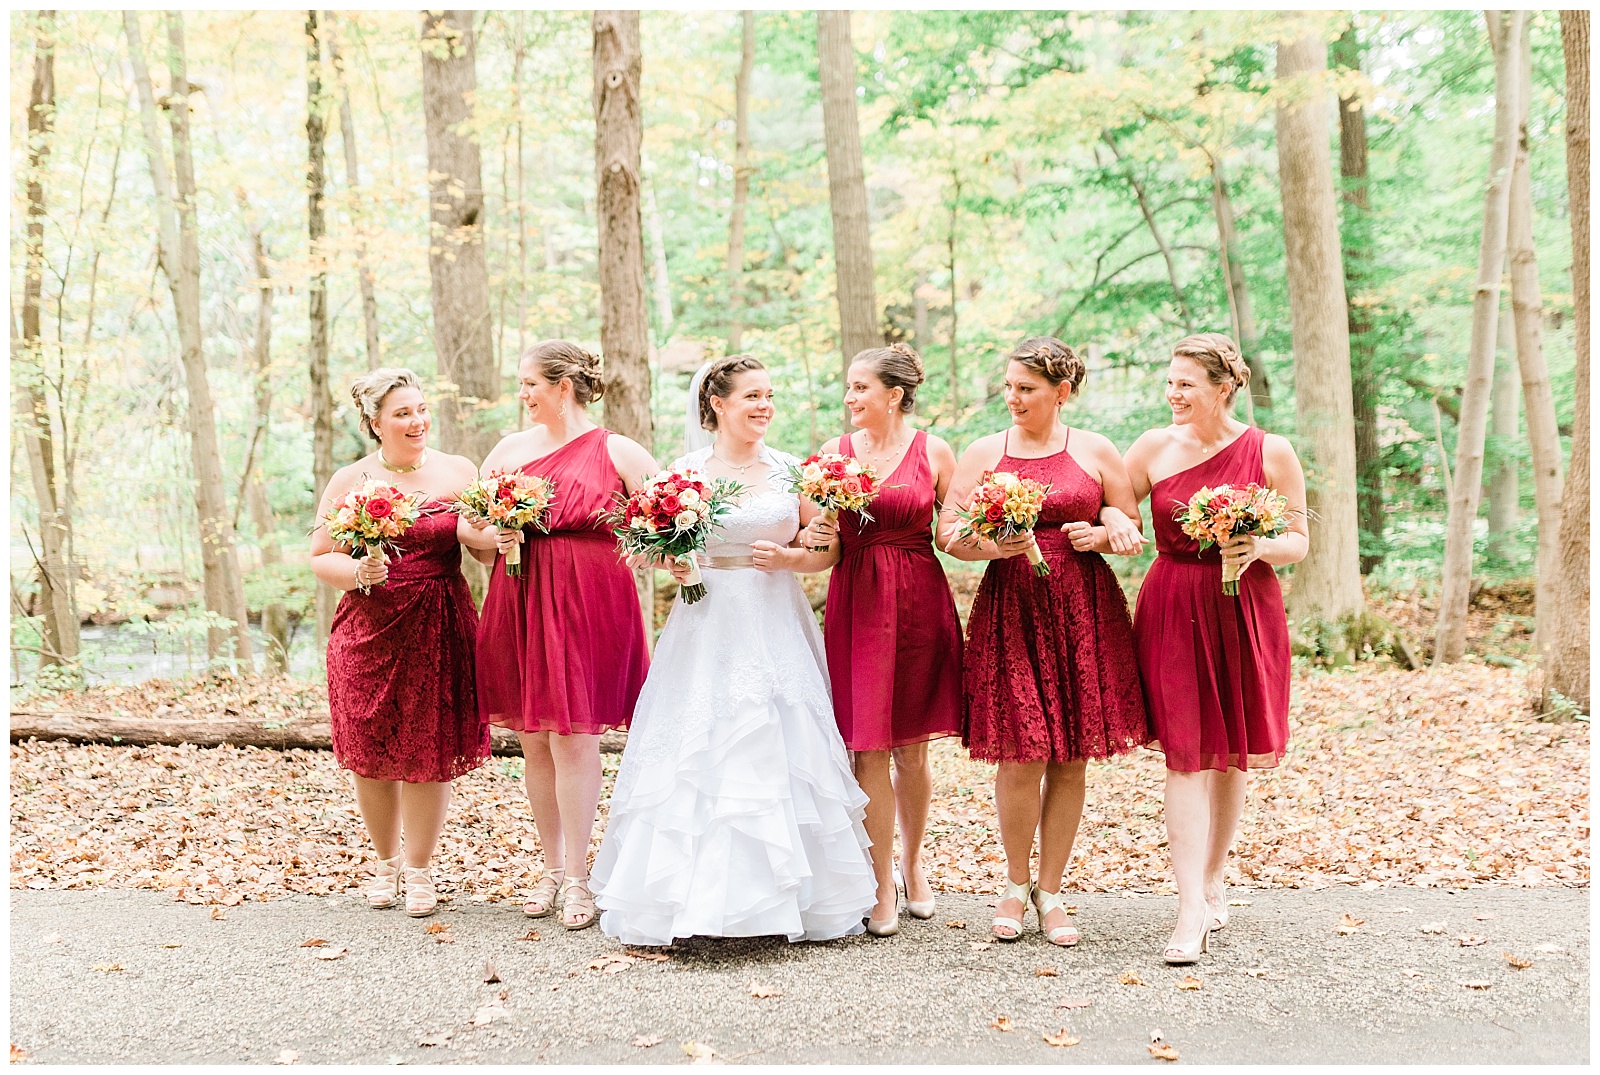 Autumn,Bridesmaids,David's Country Inn,Fall Wedding,Forest,Hackettstown,NJ Wedding Photographer,Wedding Party,Woods,